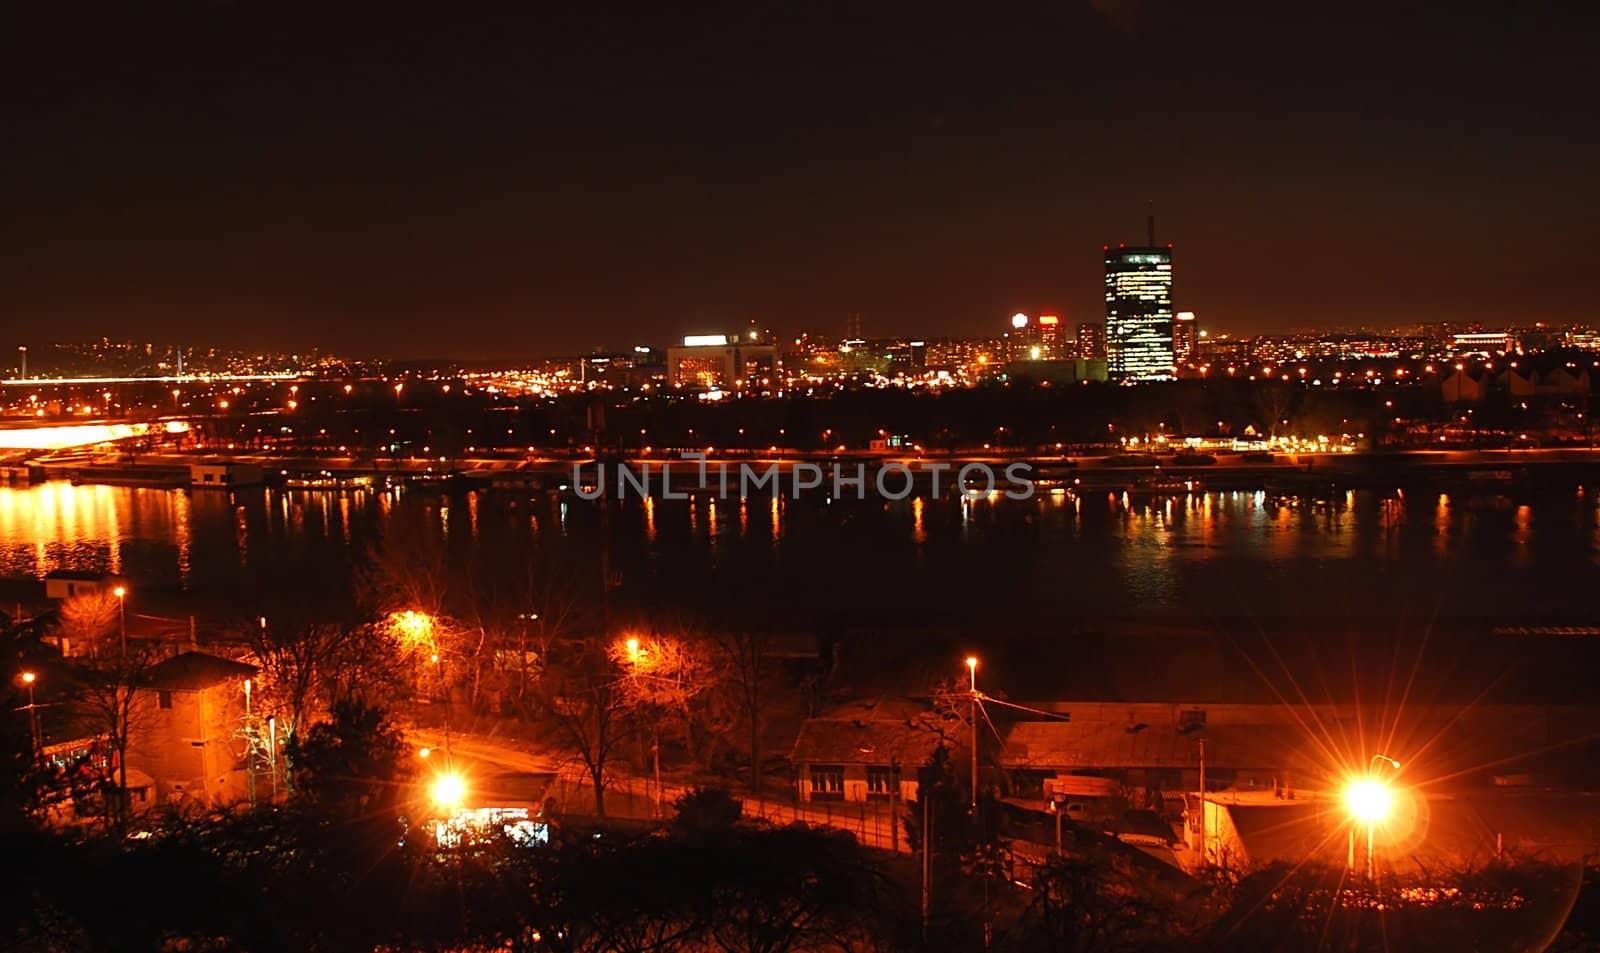 Belgrade night view by simply